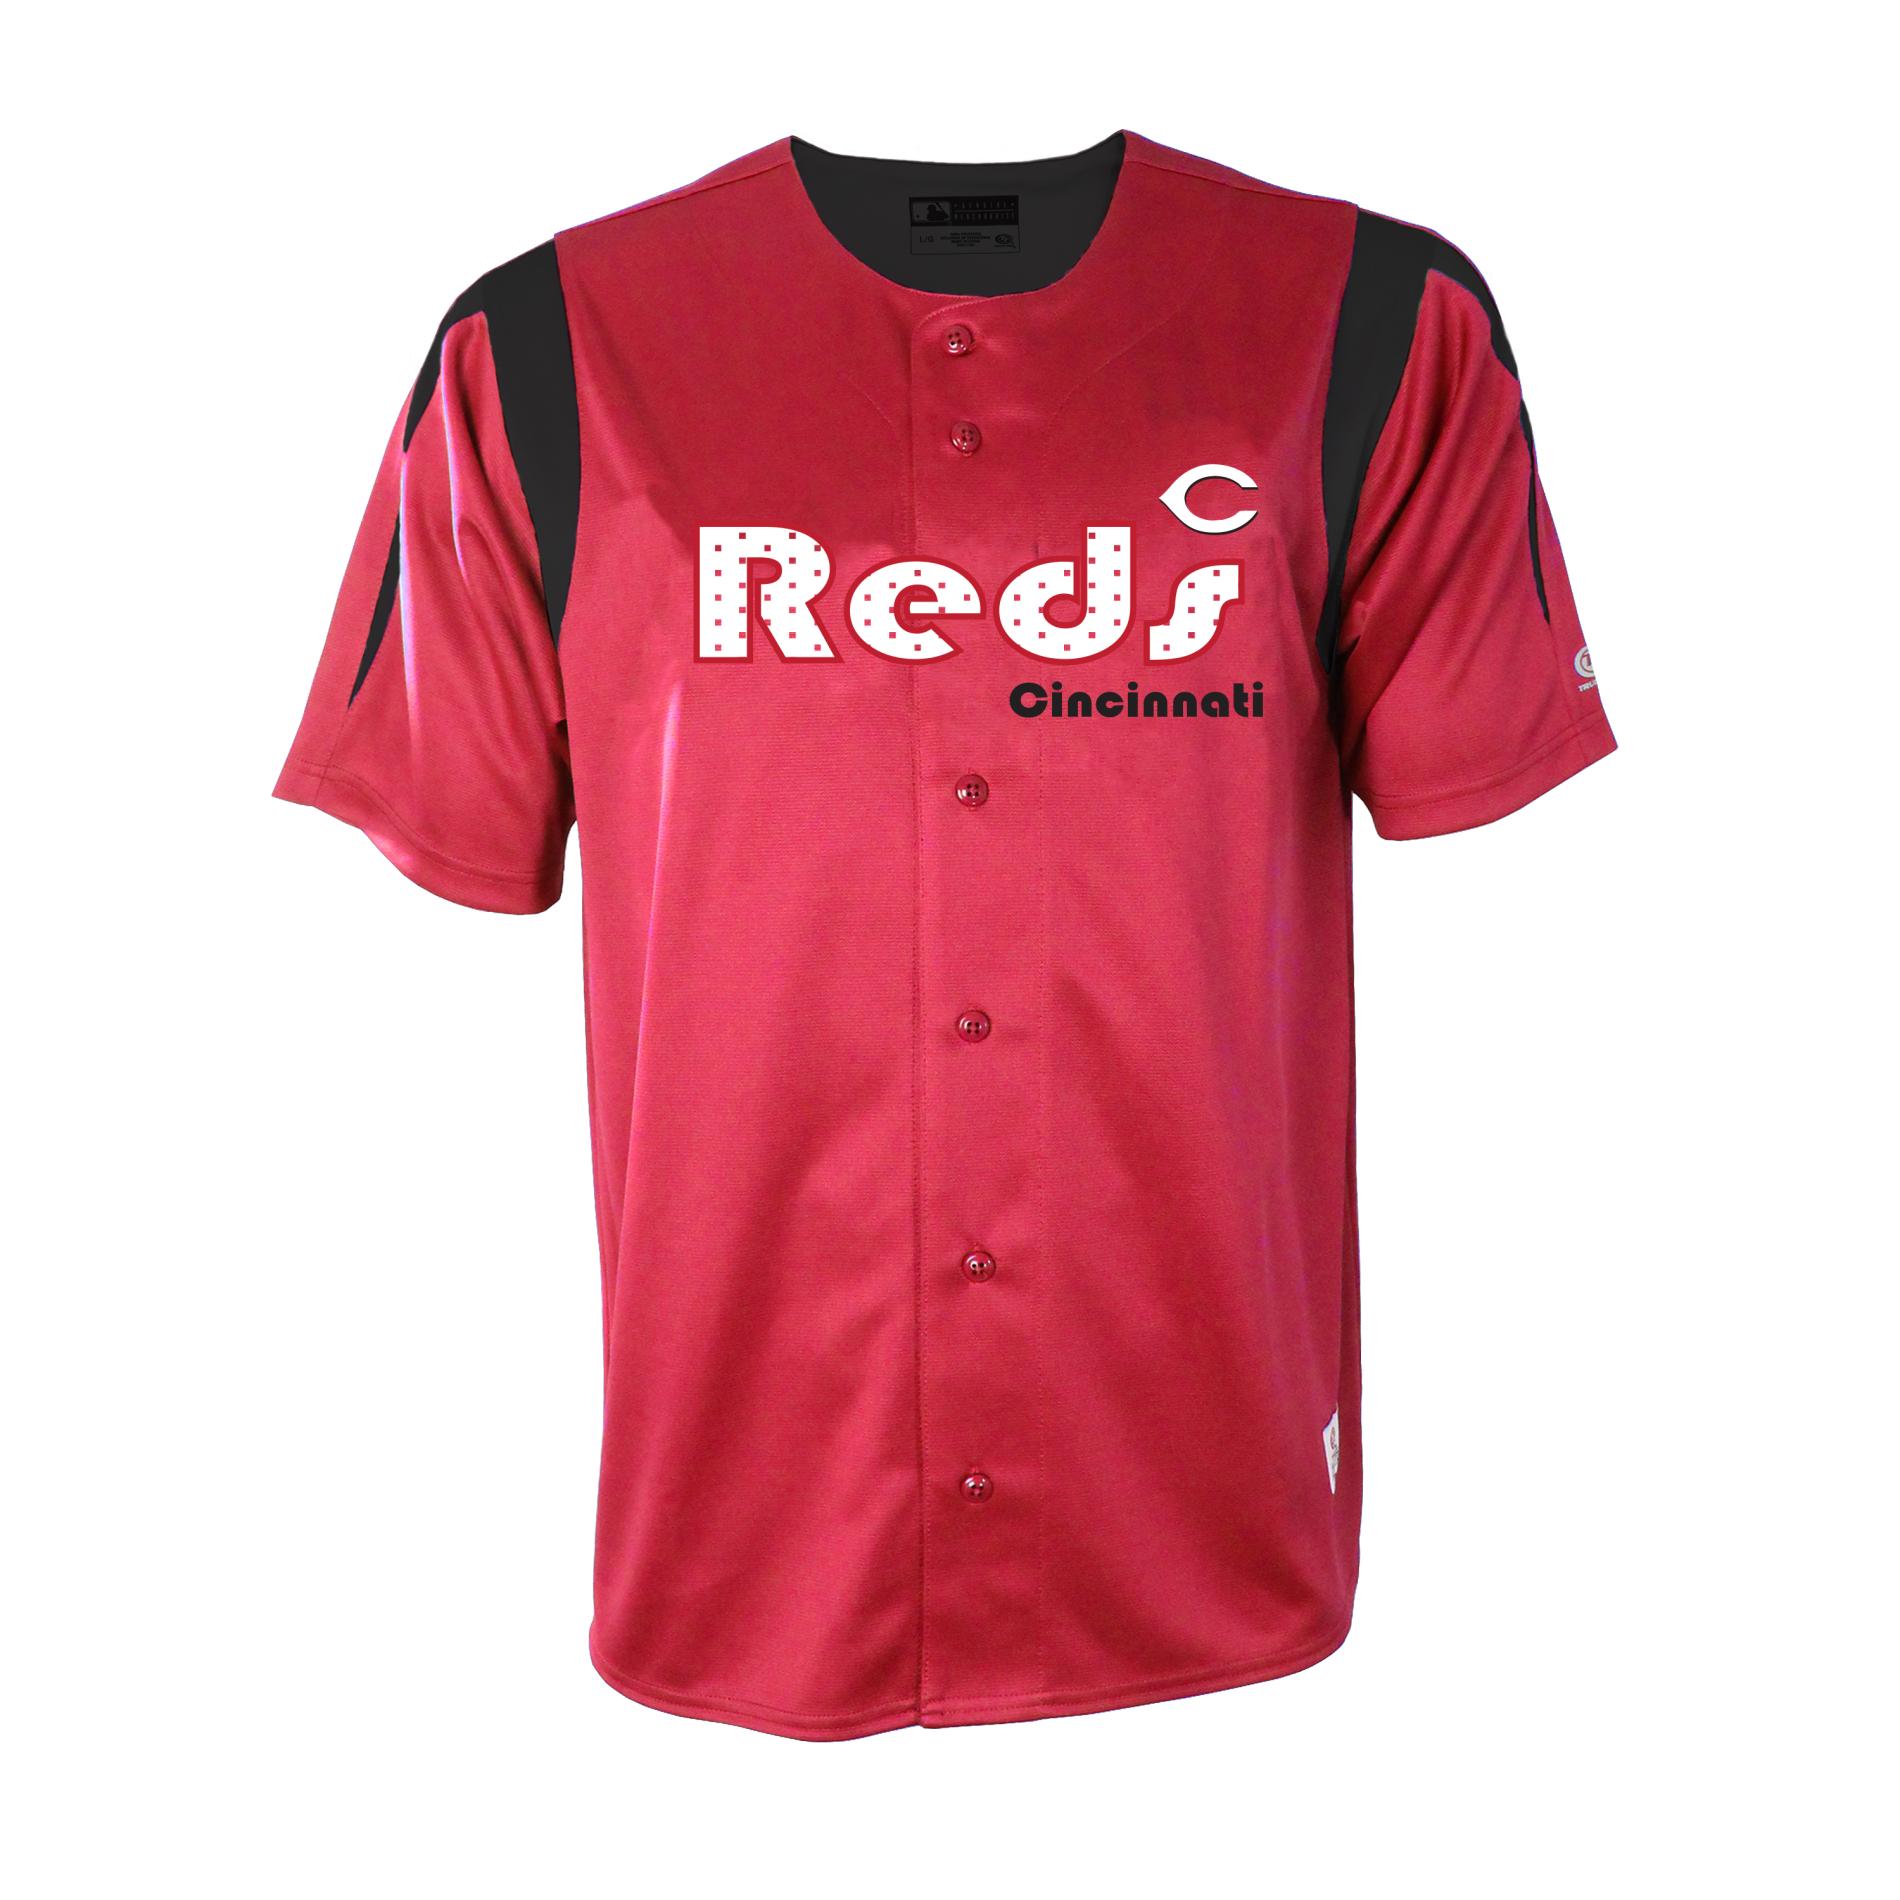 MLB Men's Baseball Jersey - Cincinnati Reds